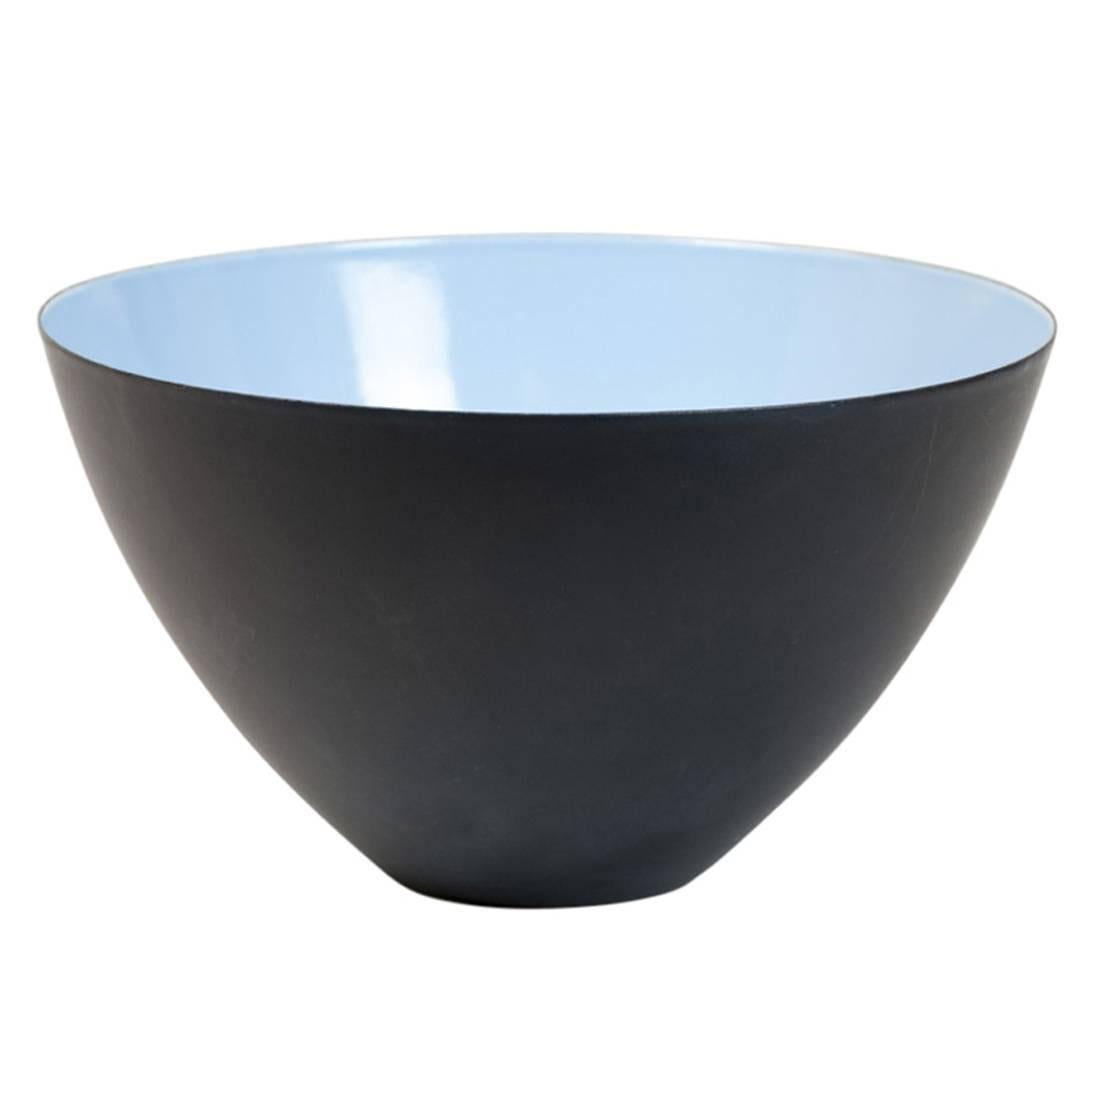 Bowl 'Krenit' by Herbert Krenchel for Torben Orskov For Sale